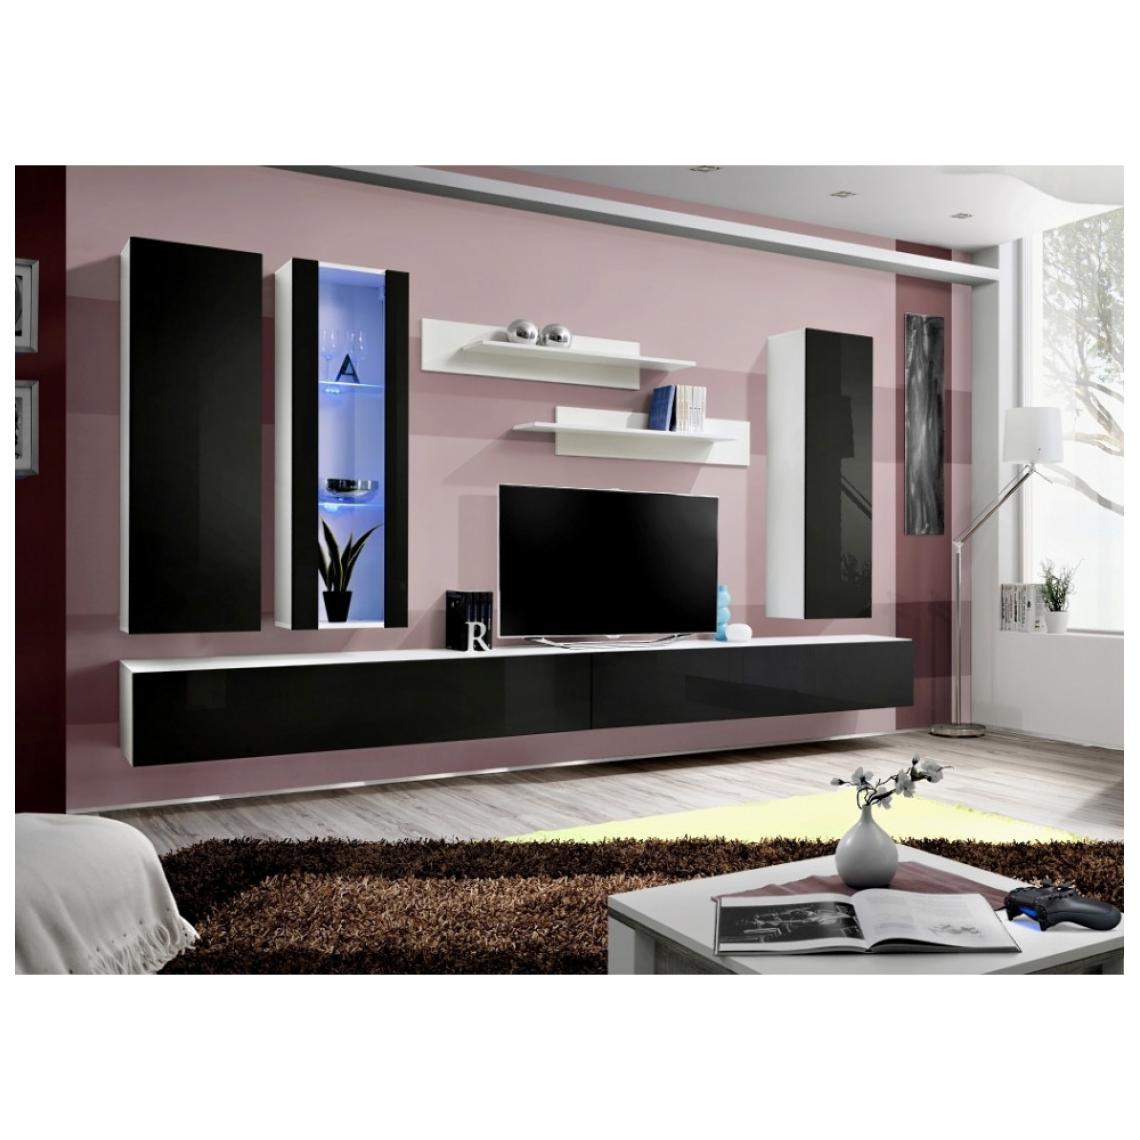 Ac-Deco - Ensemble meuble TV mural - Fly II - 320 cm x 190 cm x 40 cm - Blanc et noir - Meubles TV, Hi-Fi